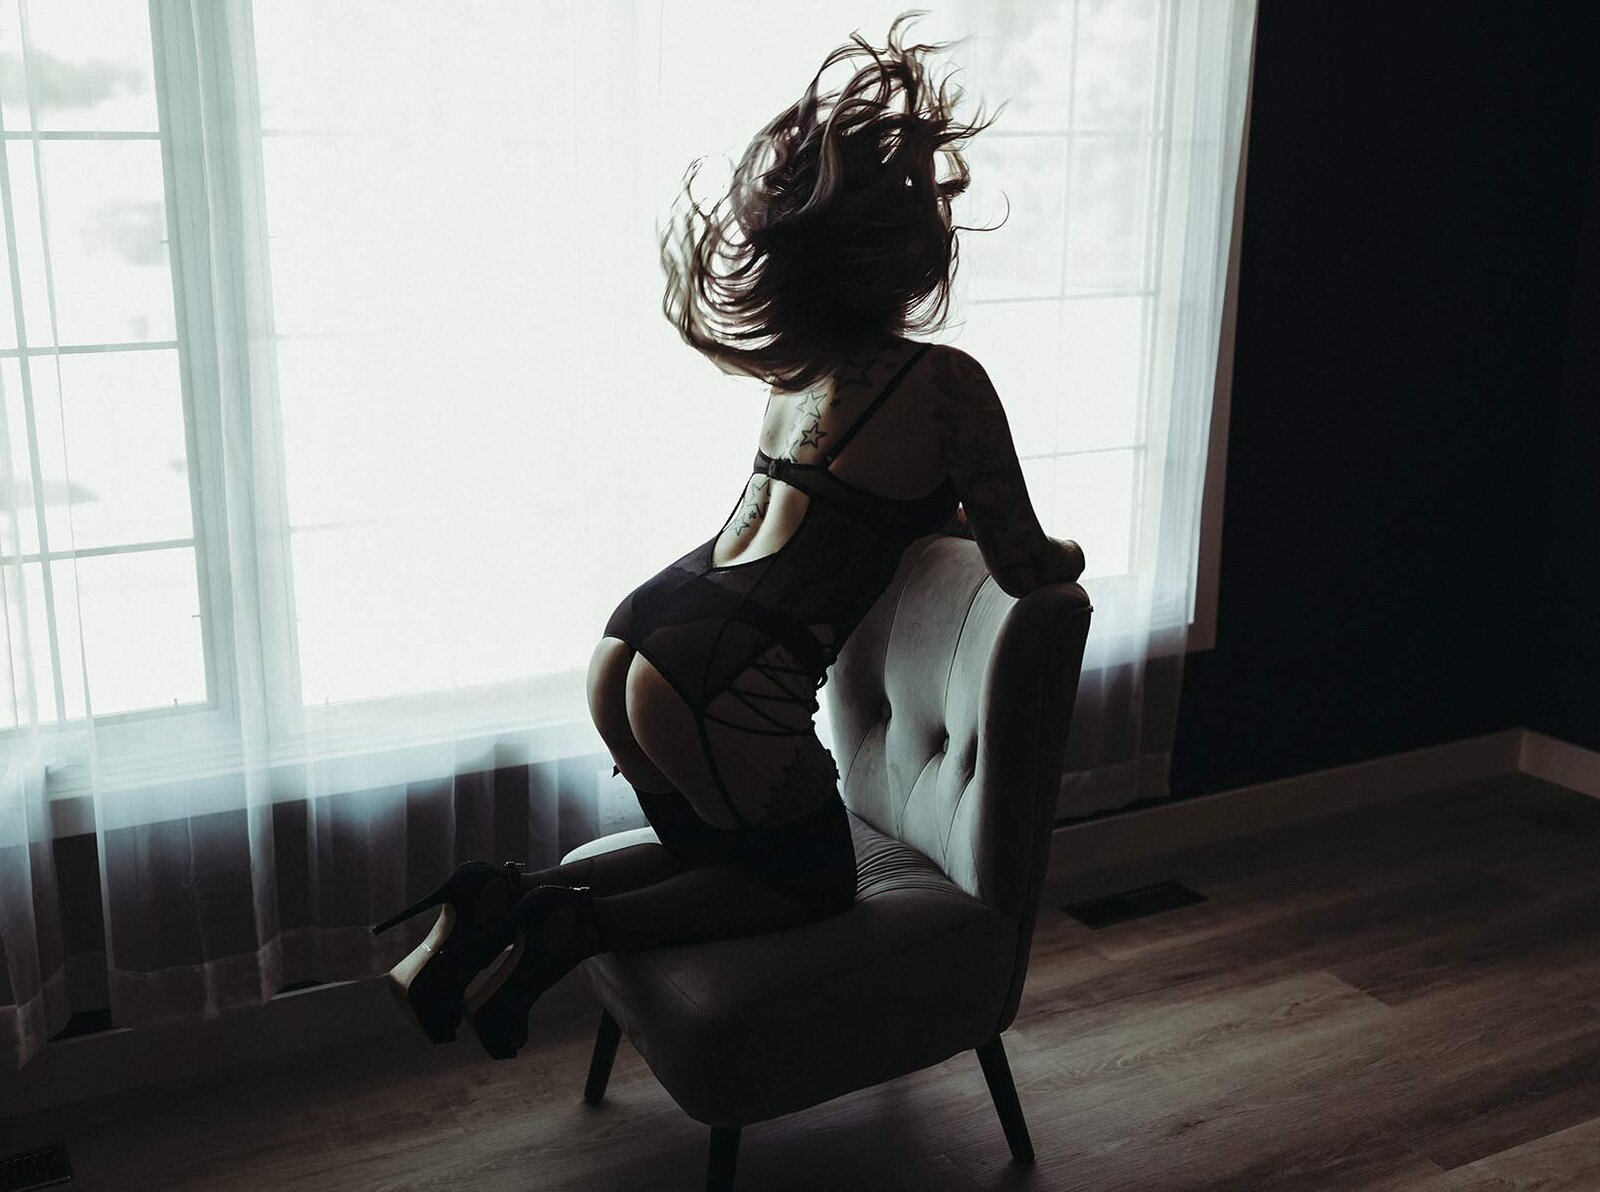 Woman whipping hair backwards on chair for boudoir photoshoot